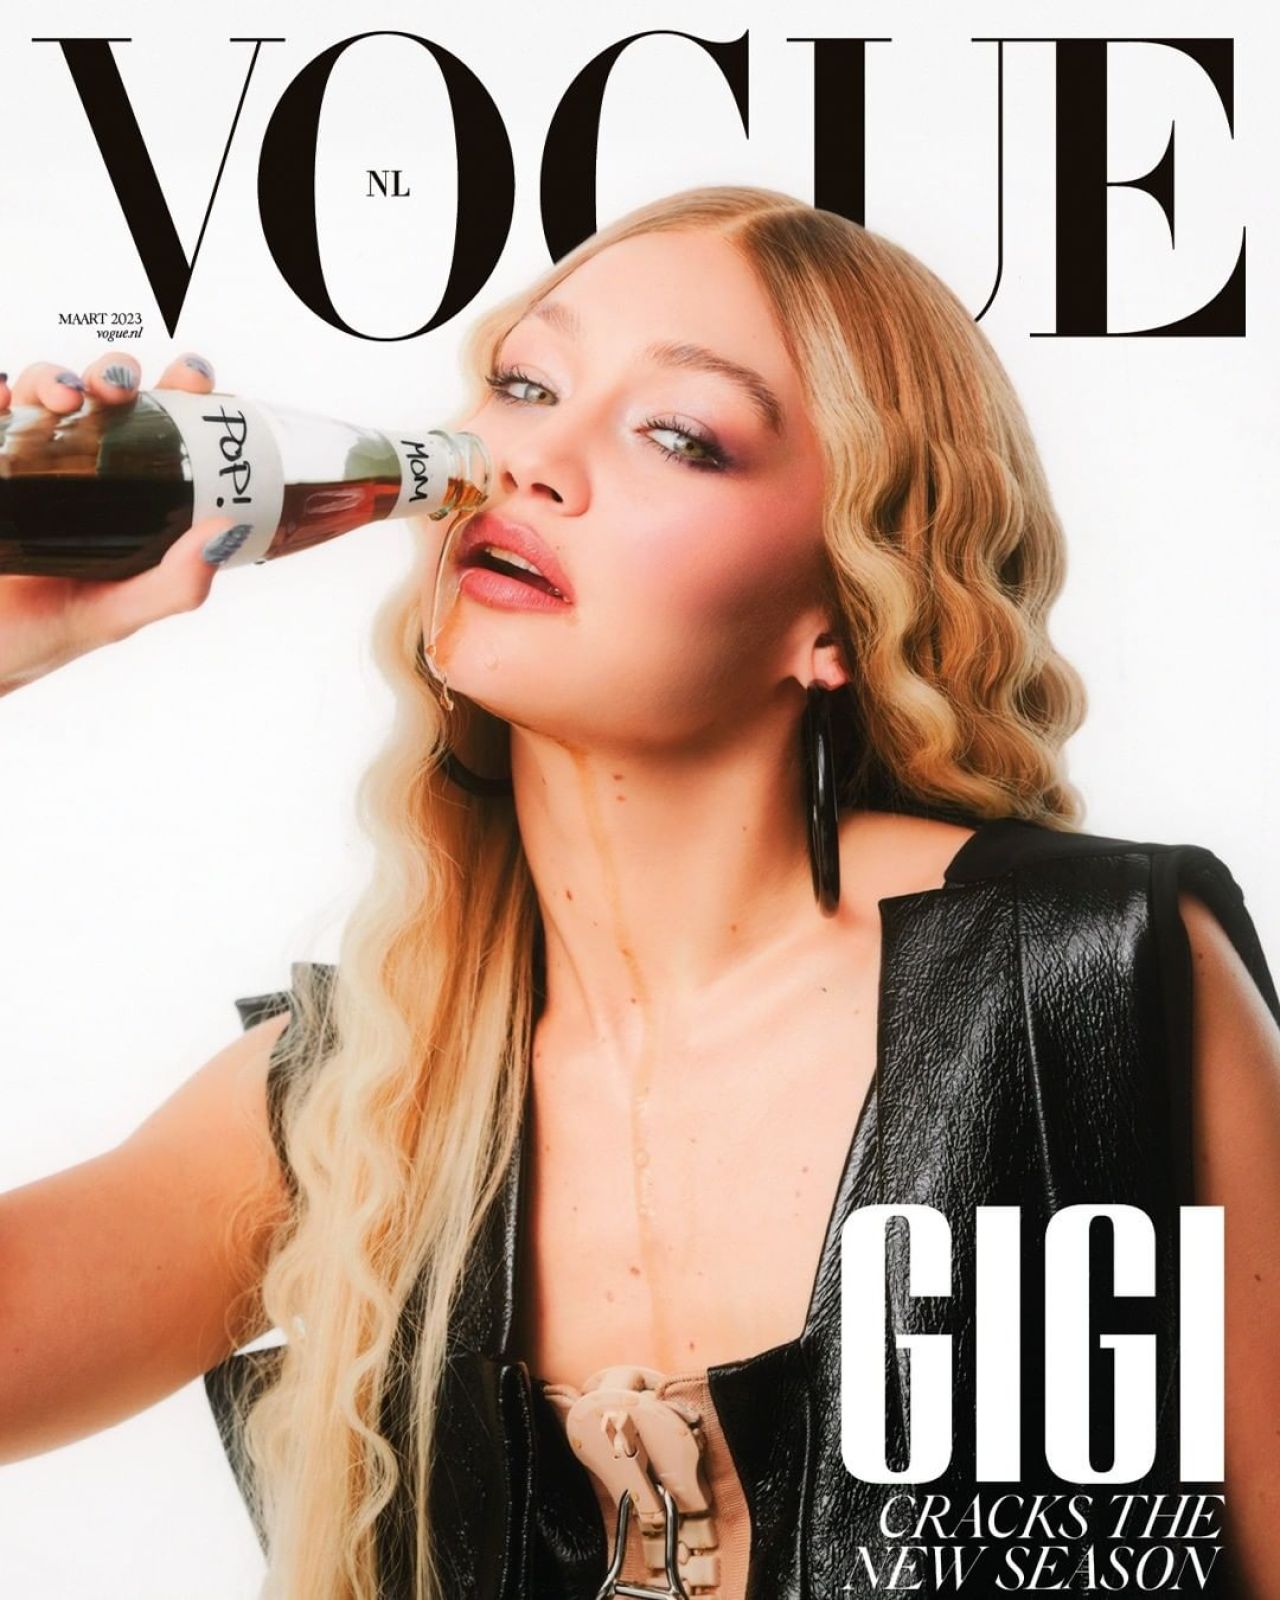 Gigi Hadid Self-Portrait Spring 2023 Campaign